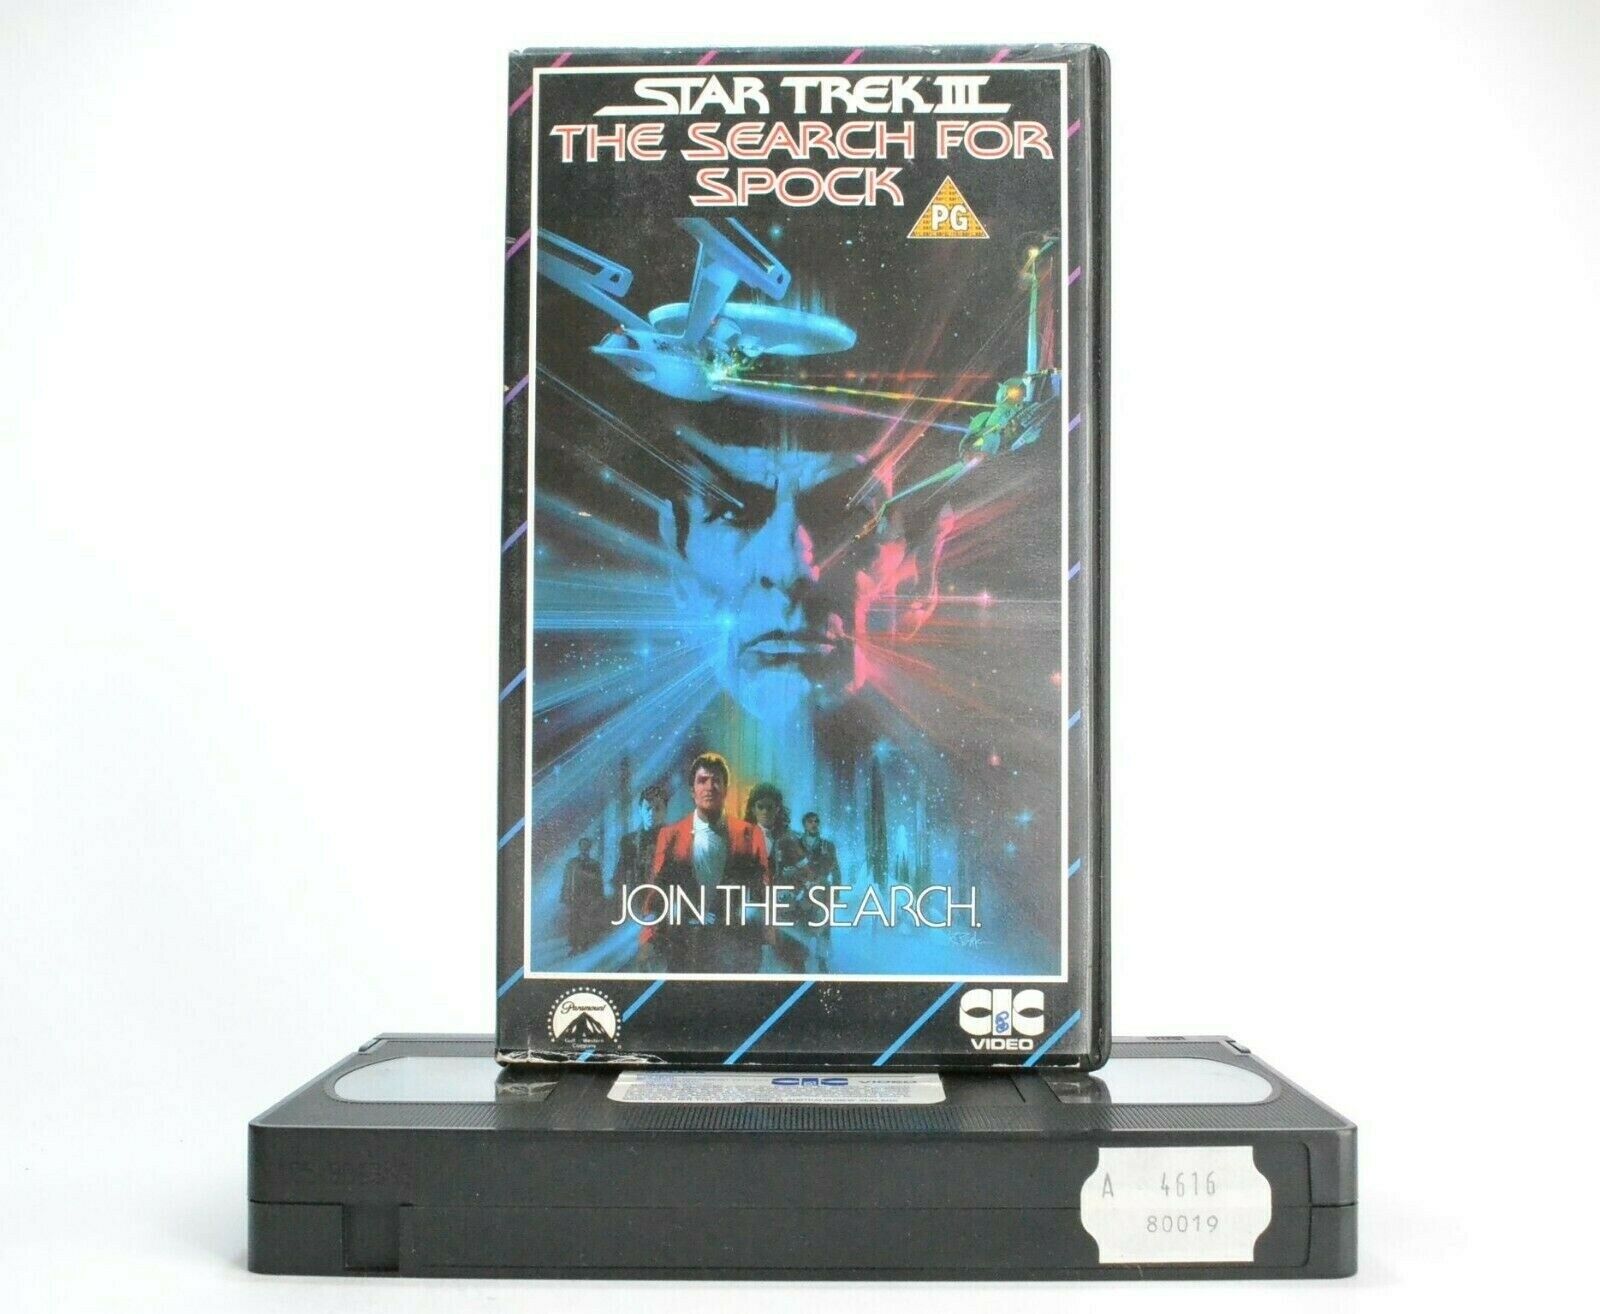 Star Trek 3: The Search For Spock: Sci-Fi Classic (1984) - Leonard Nimoy - VHS-